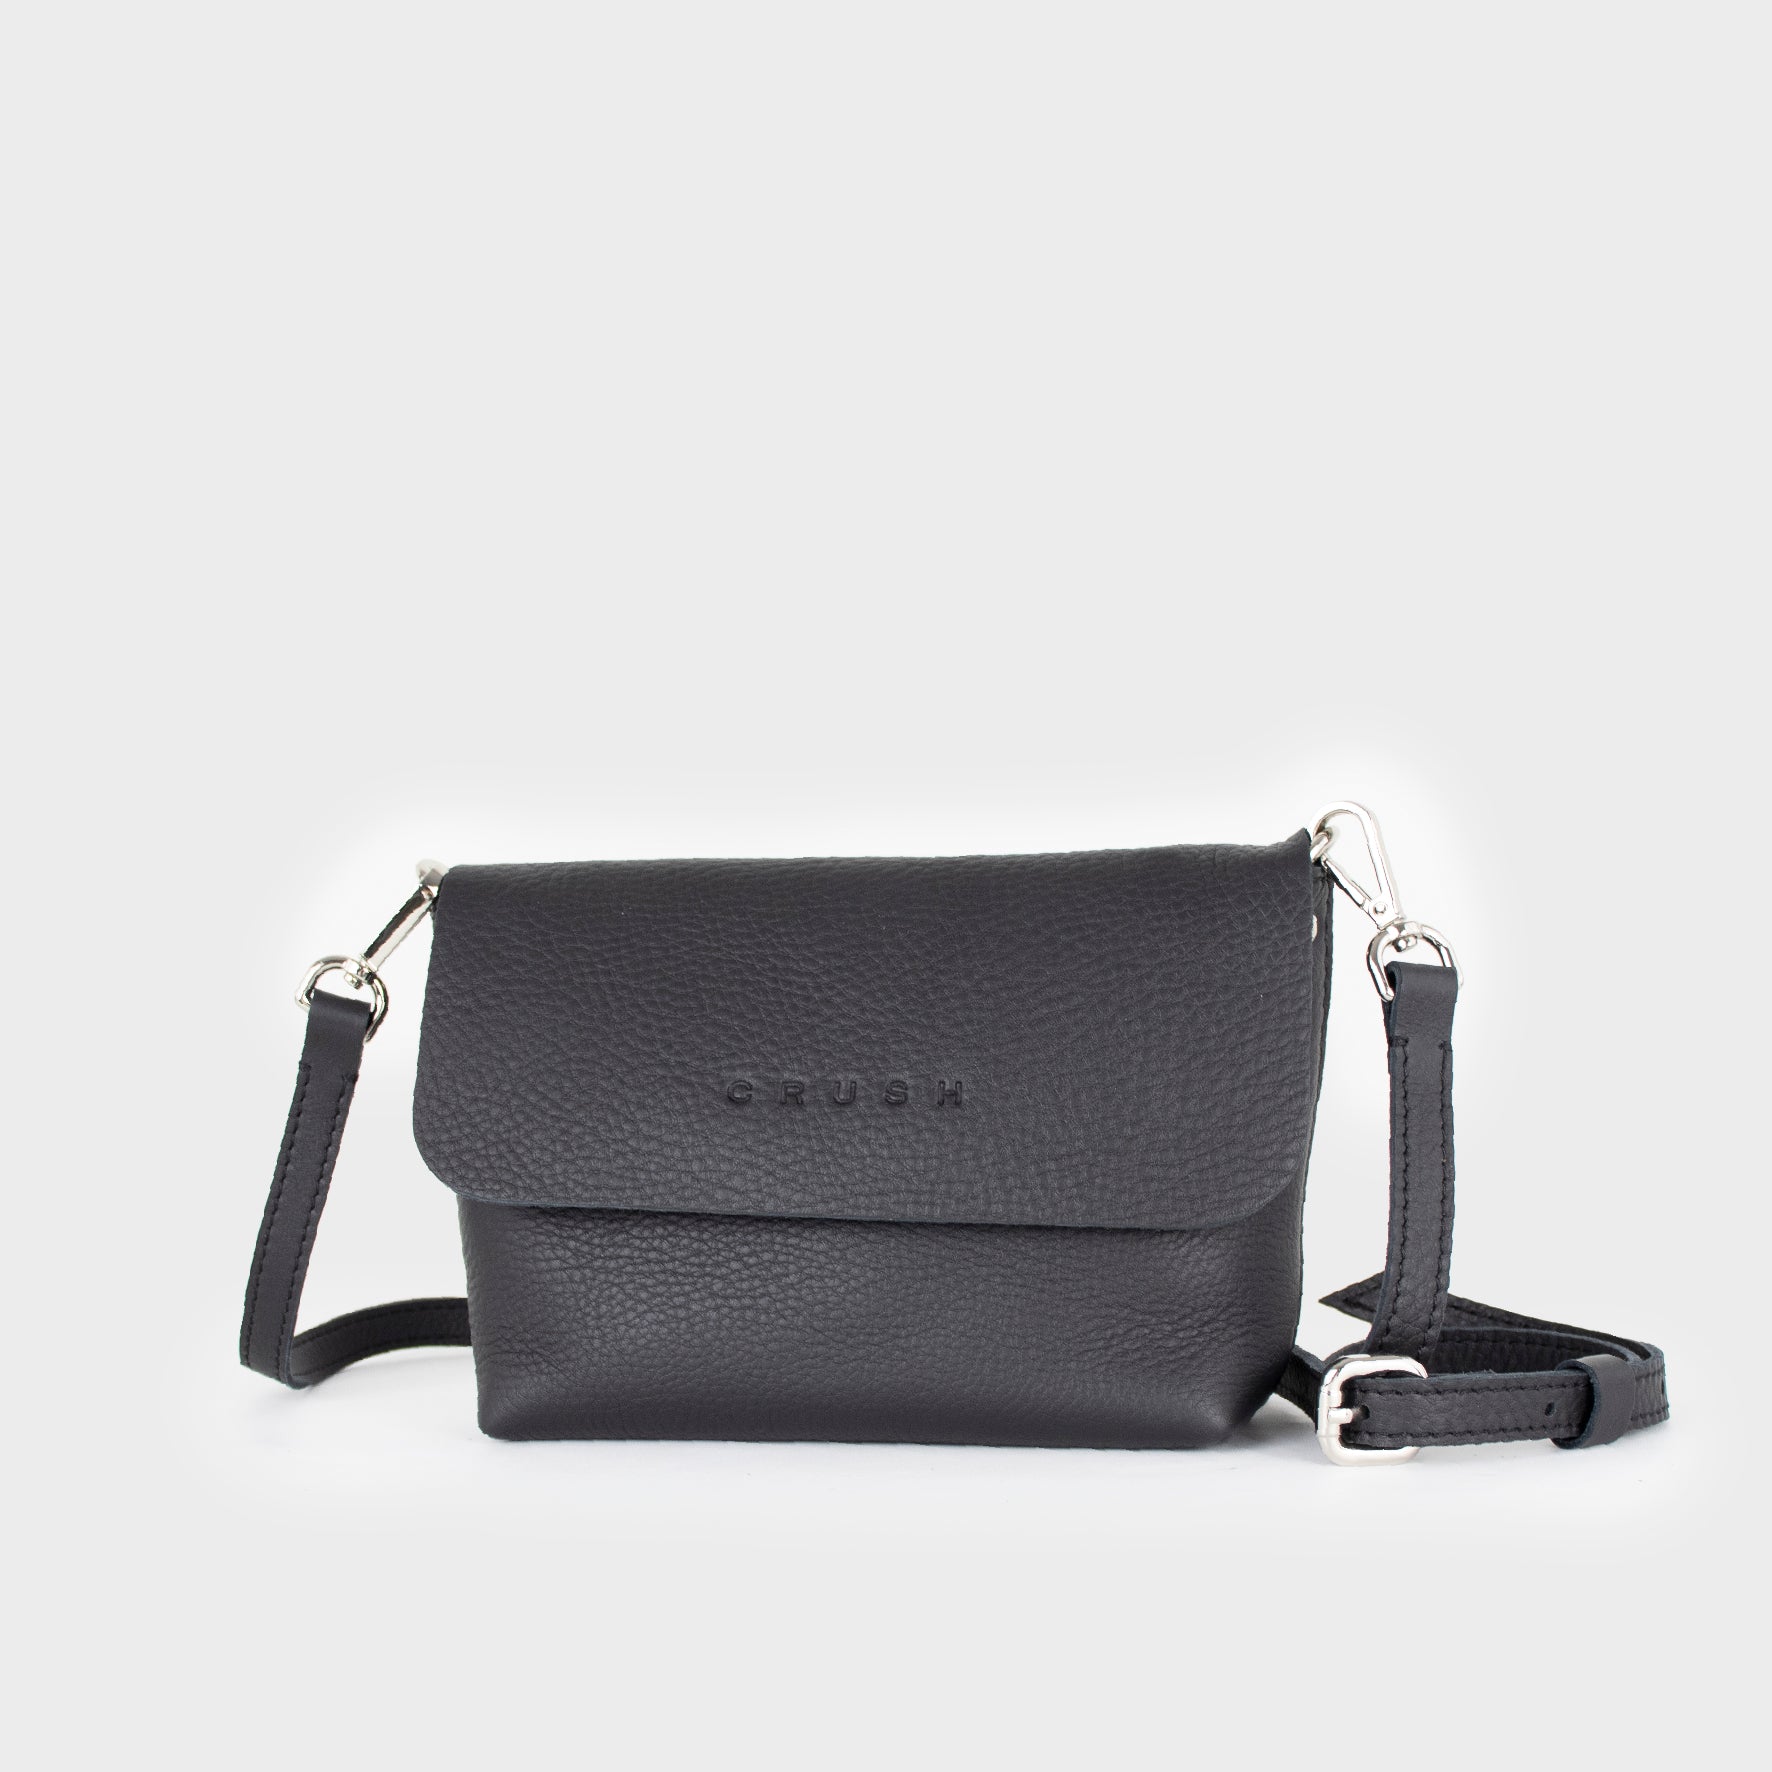 Joy Syna S - Leather Crossbody Bag Women - Black